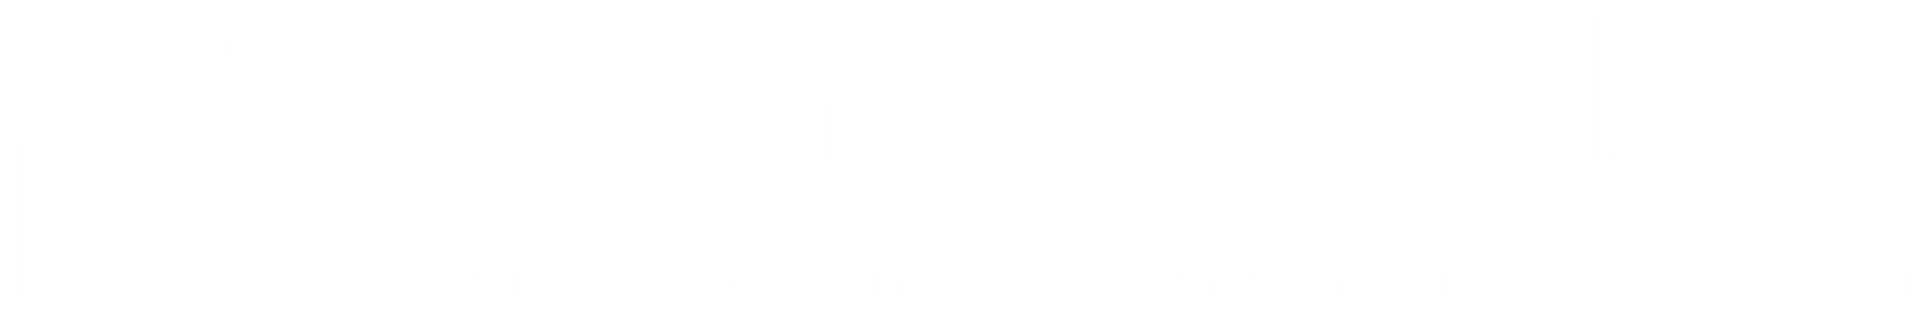 Donkey Mobile community church app